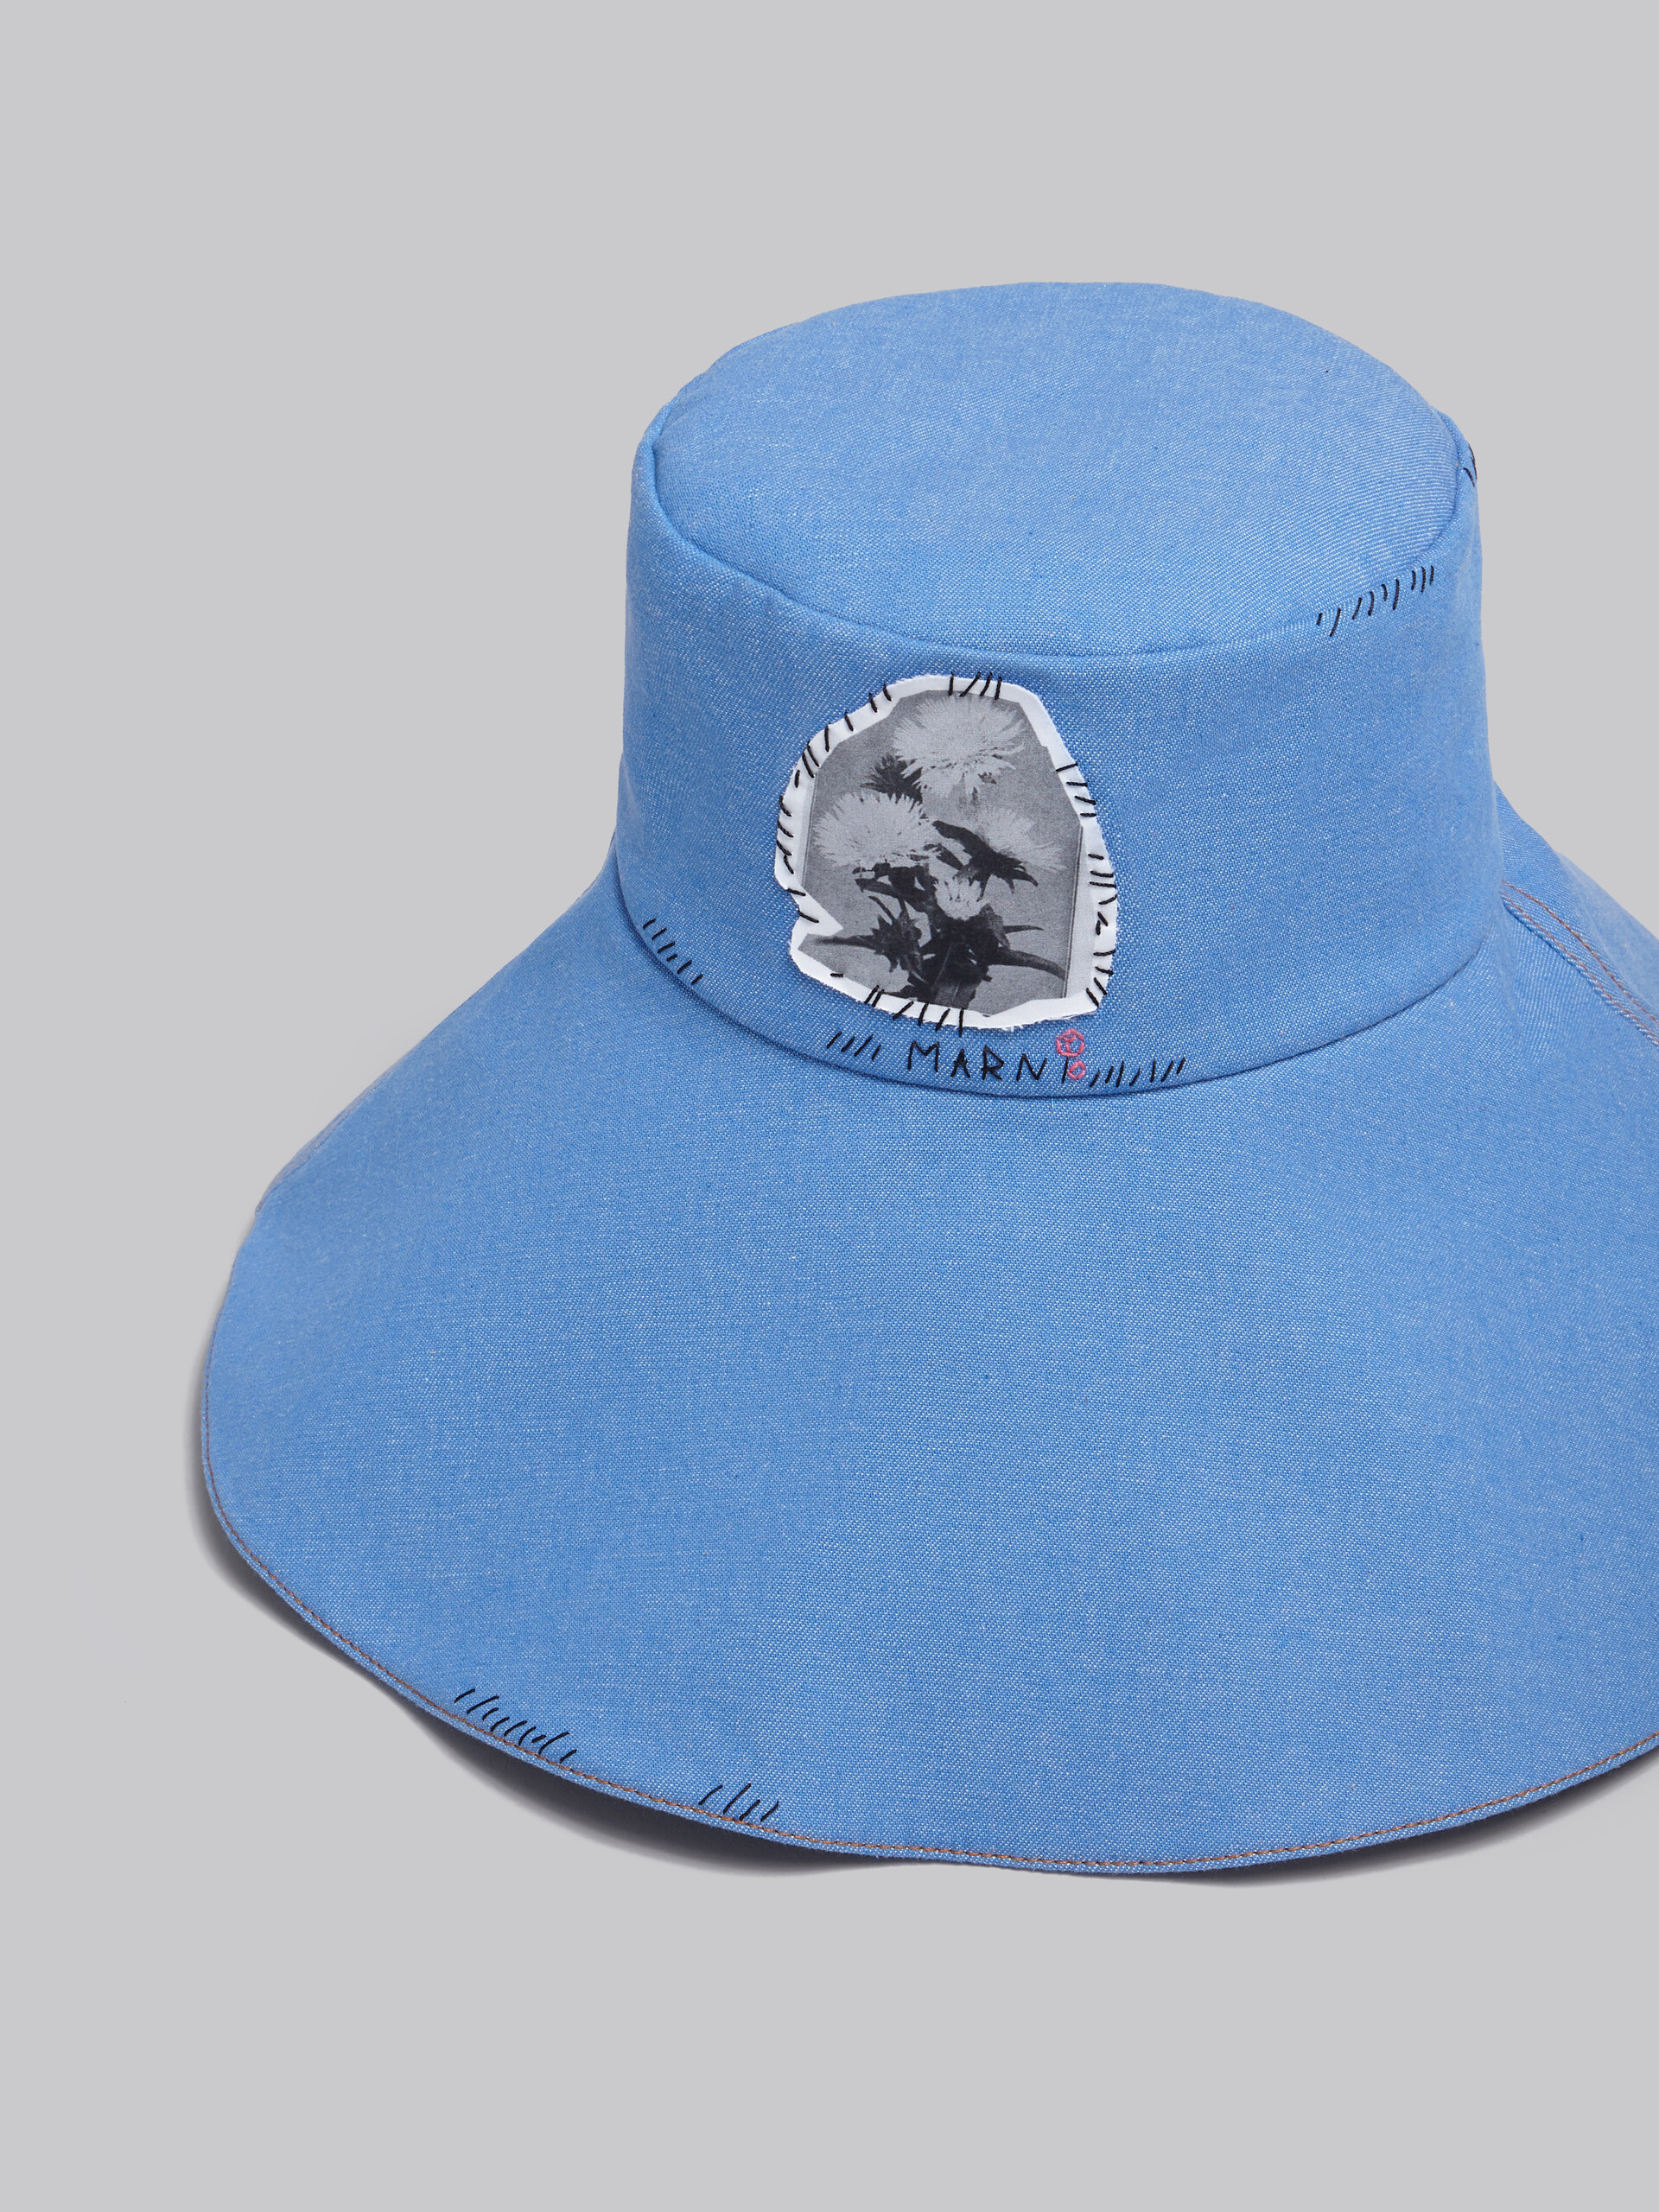 Cappello bucket in denim blu con impunture Marni - Cappelli - Image 4